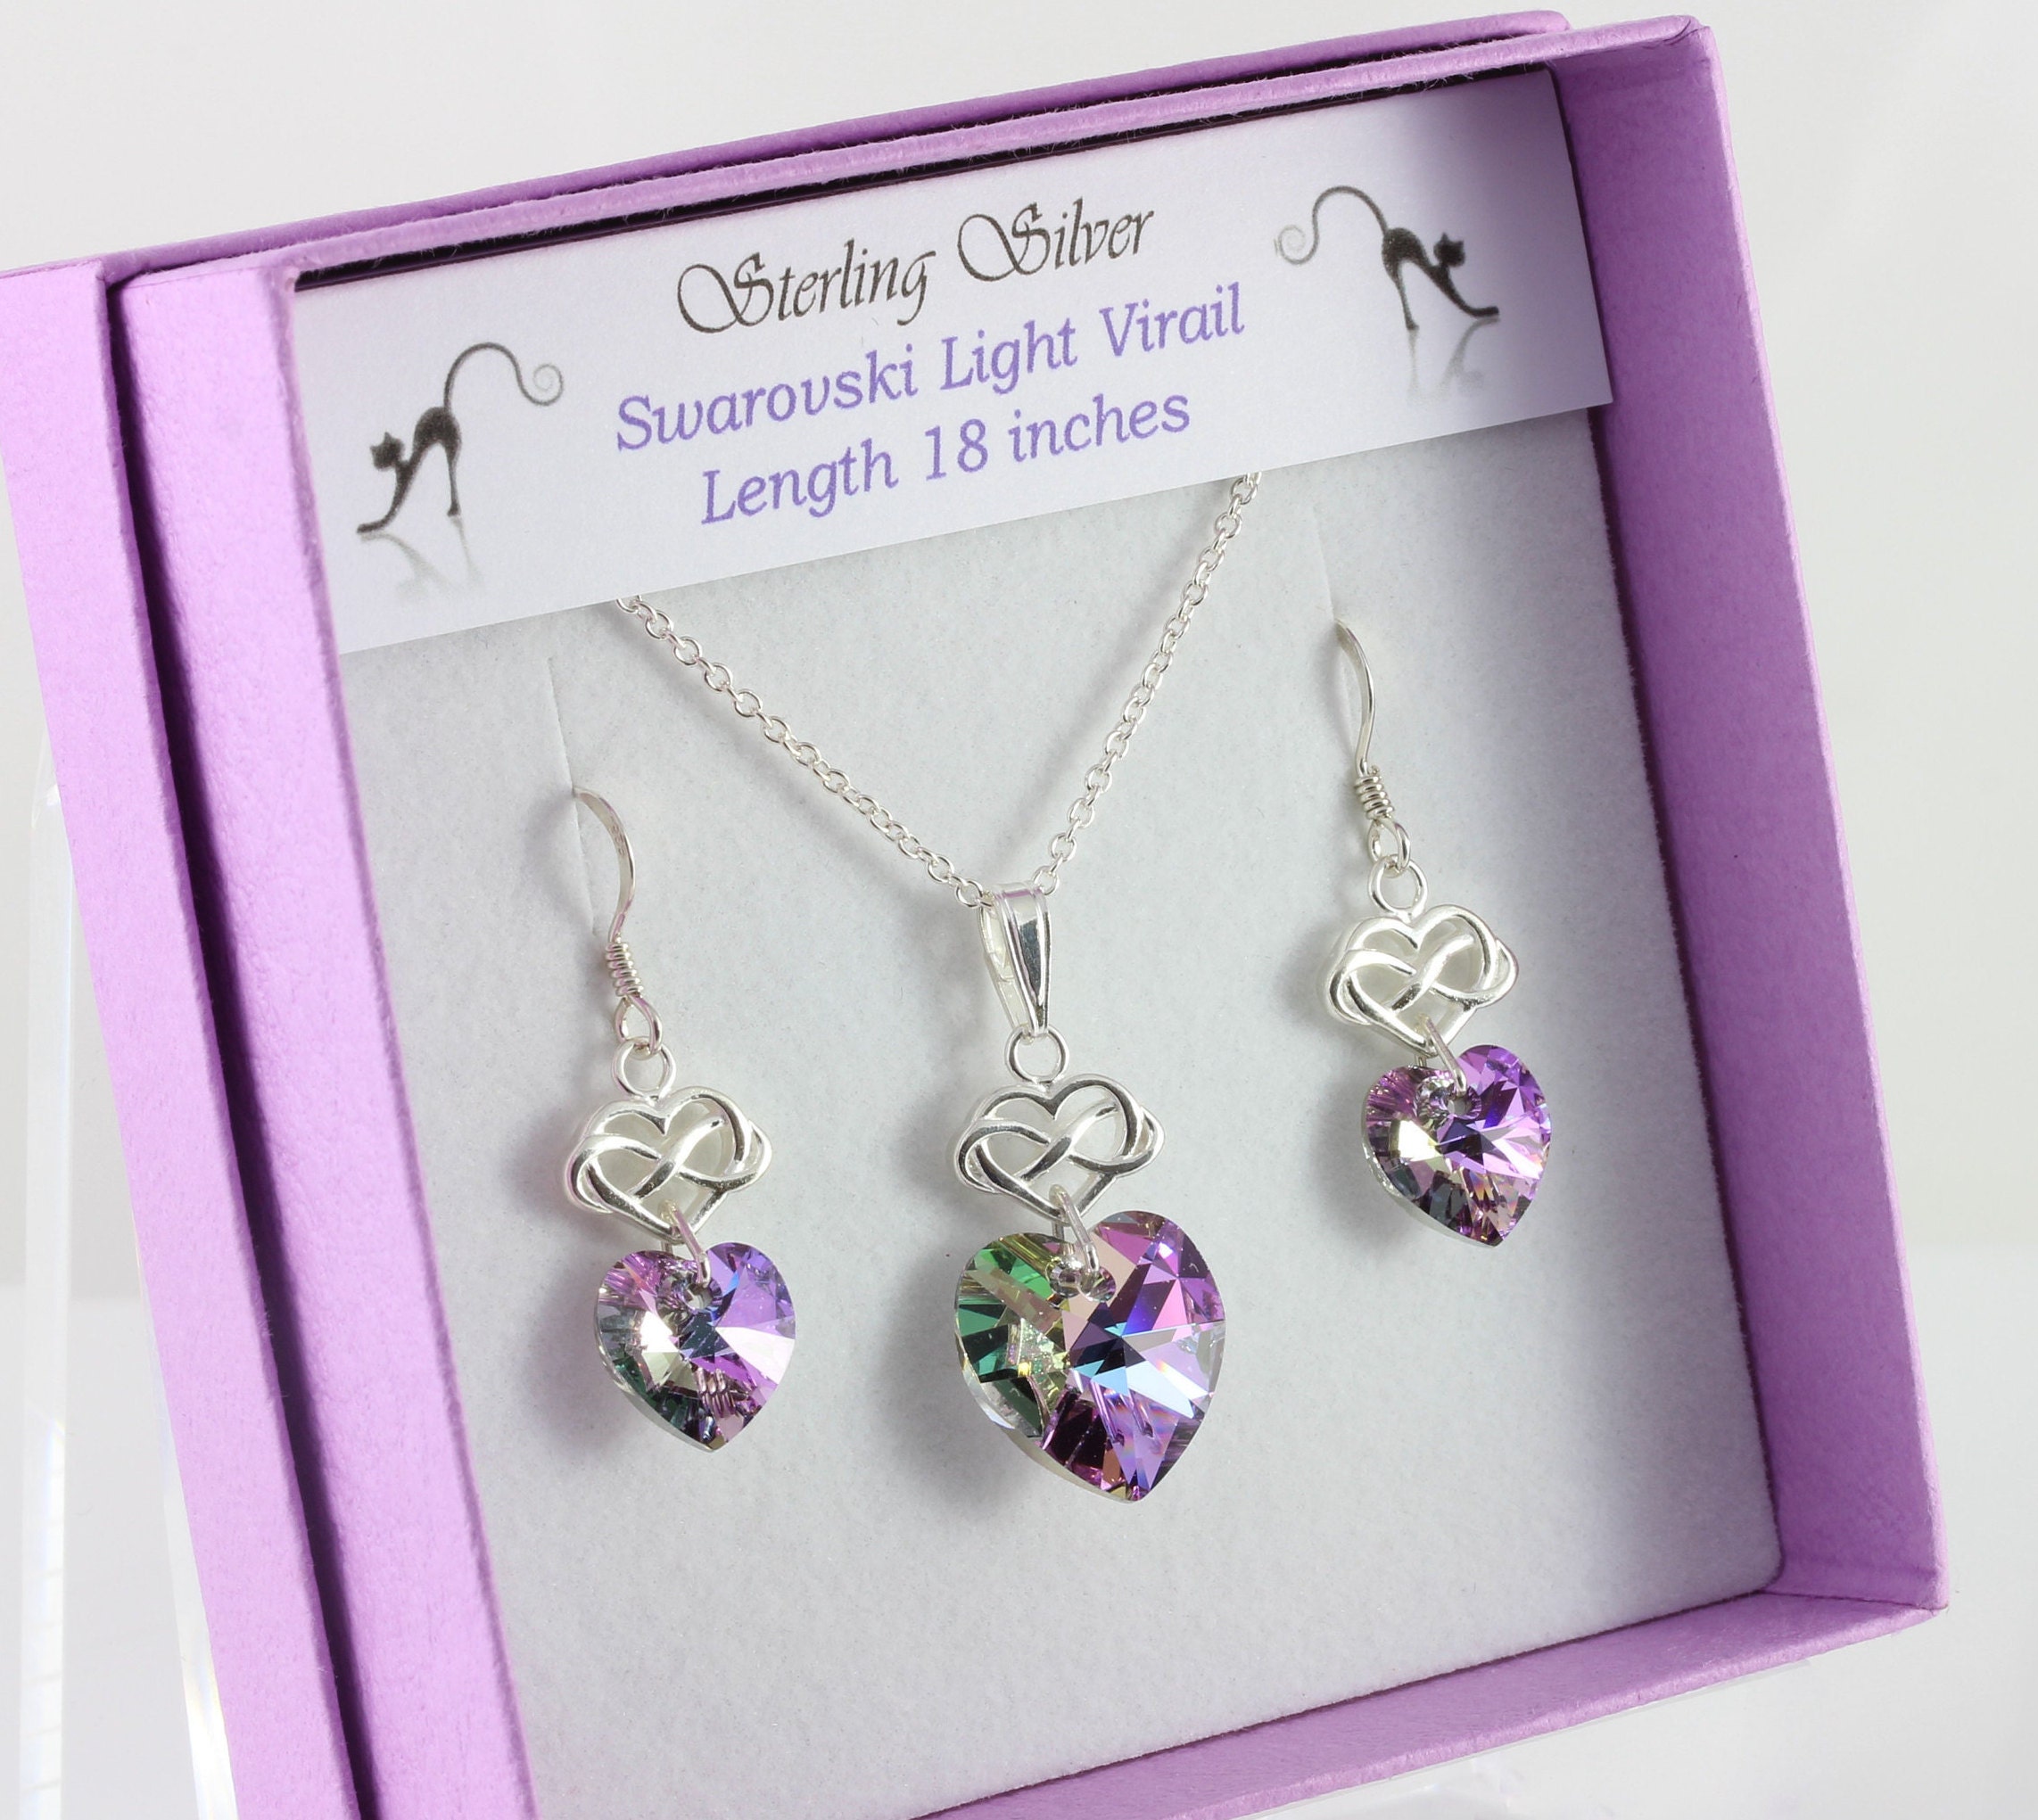 sterling Silver & Swarovski Light Vitrail Crystal Infinity Heart Necklace & Earring Set